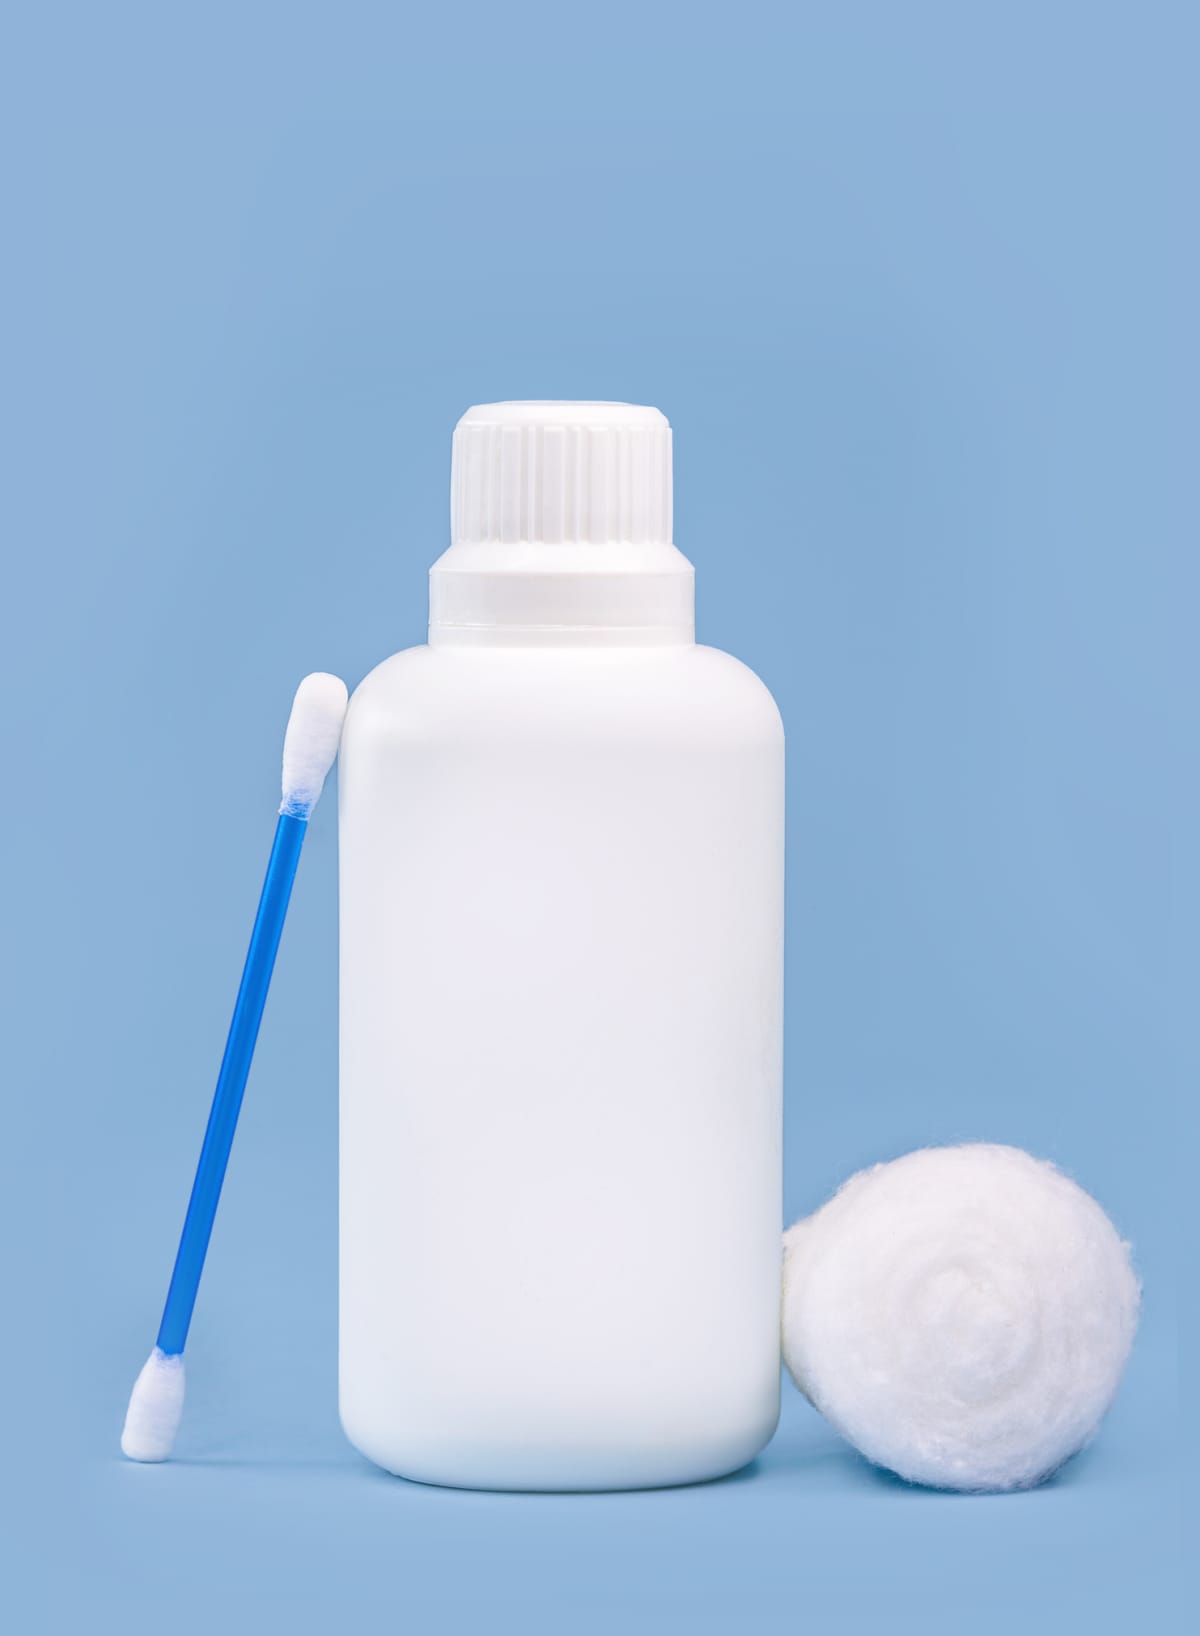 A white plastic bottle next to a cotton swab